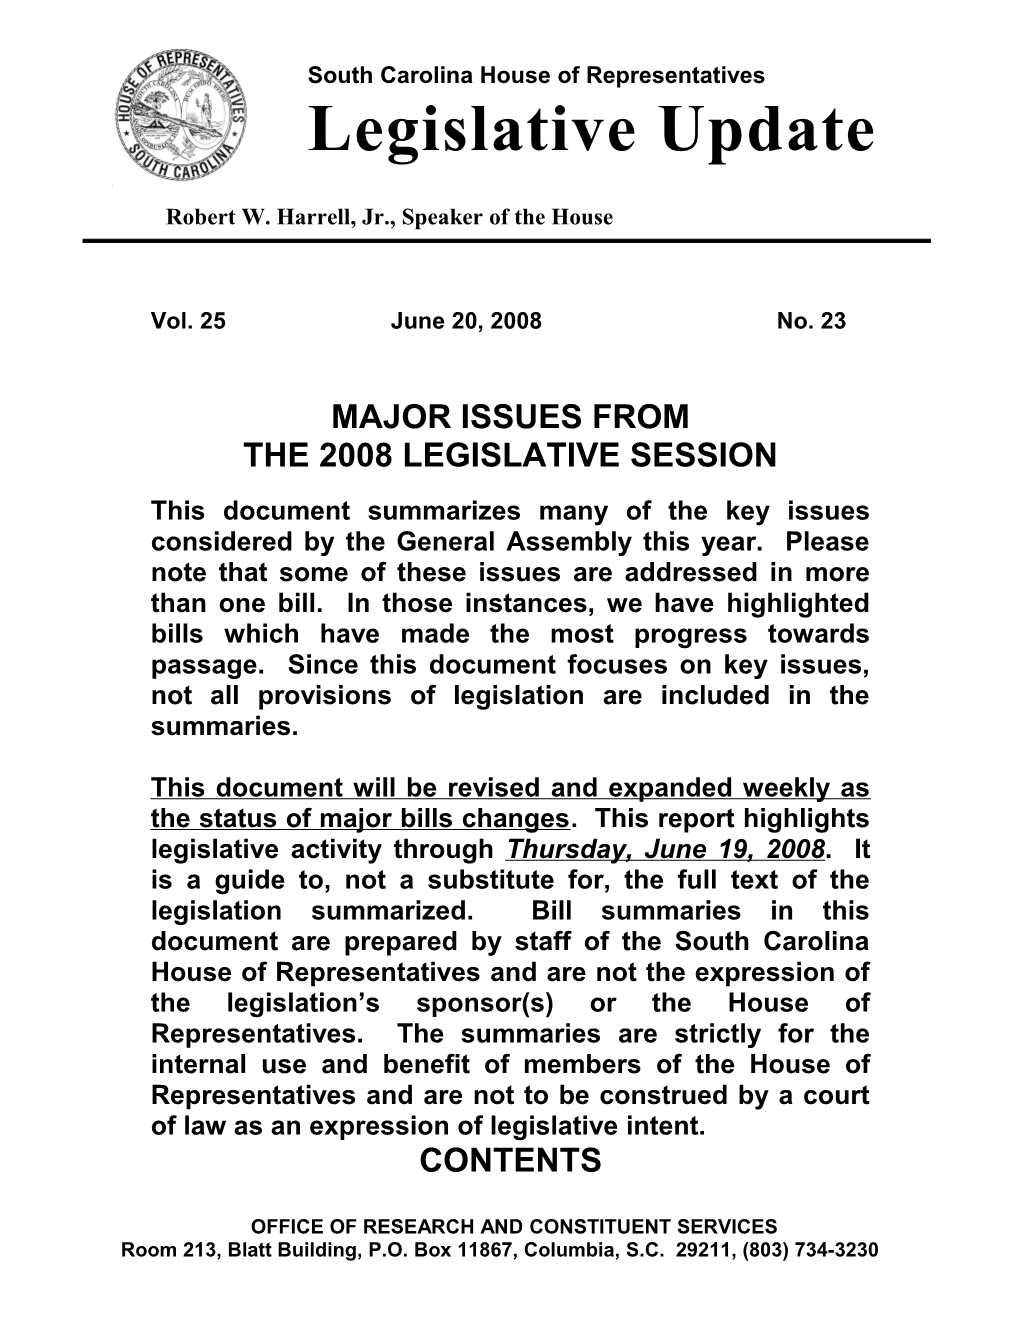 Legislative Update - Vol. 25 No. 23 June 20, 2008 - South Carolina Legislature Online